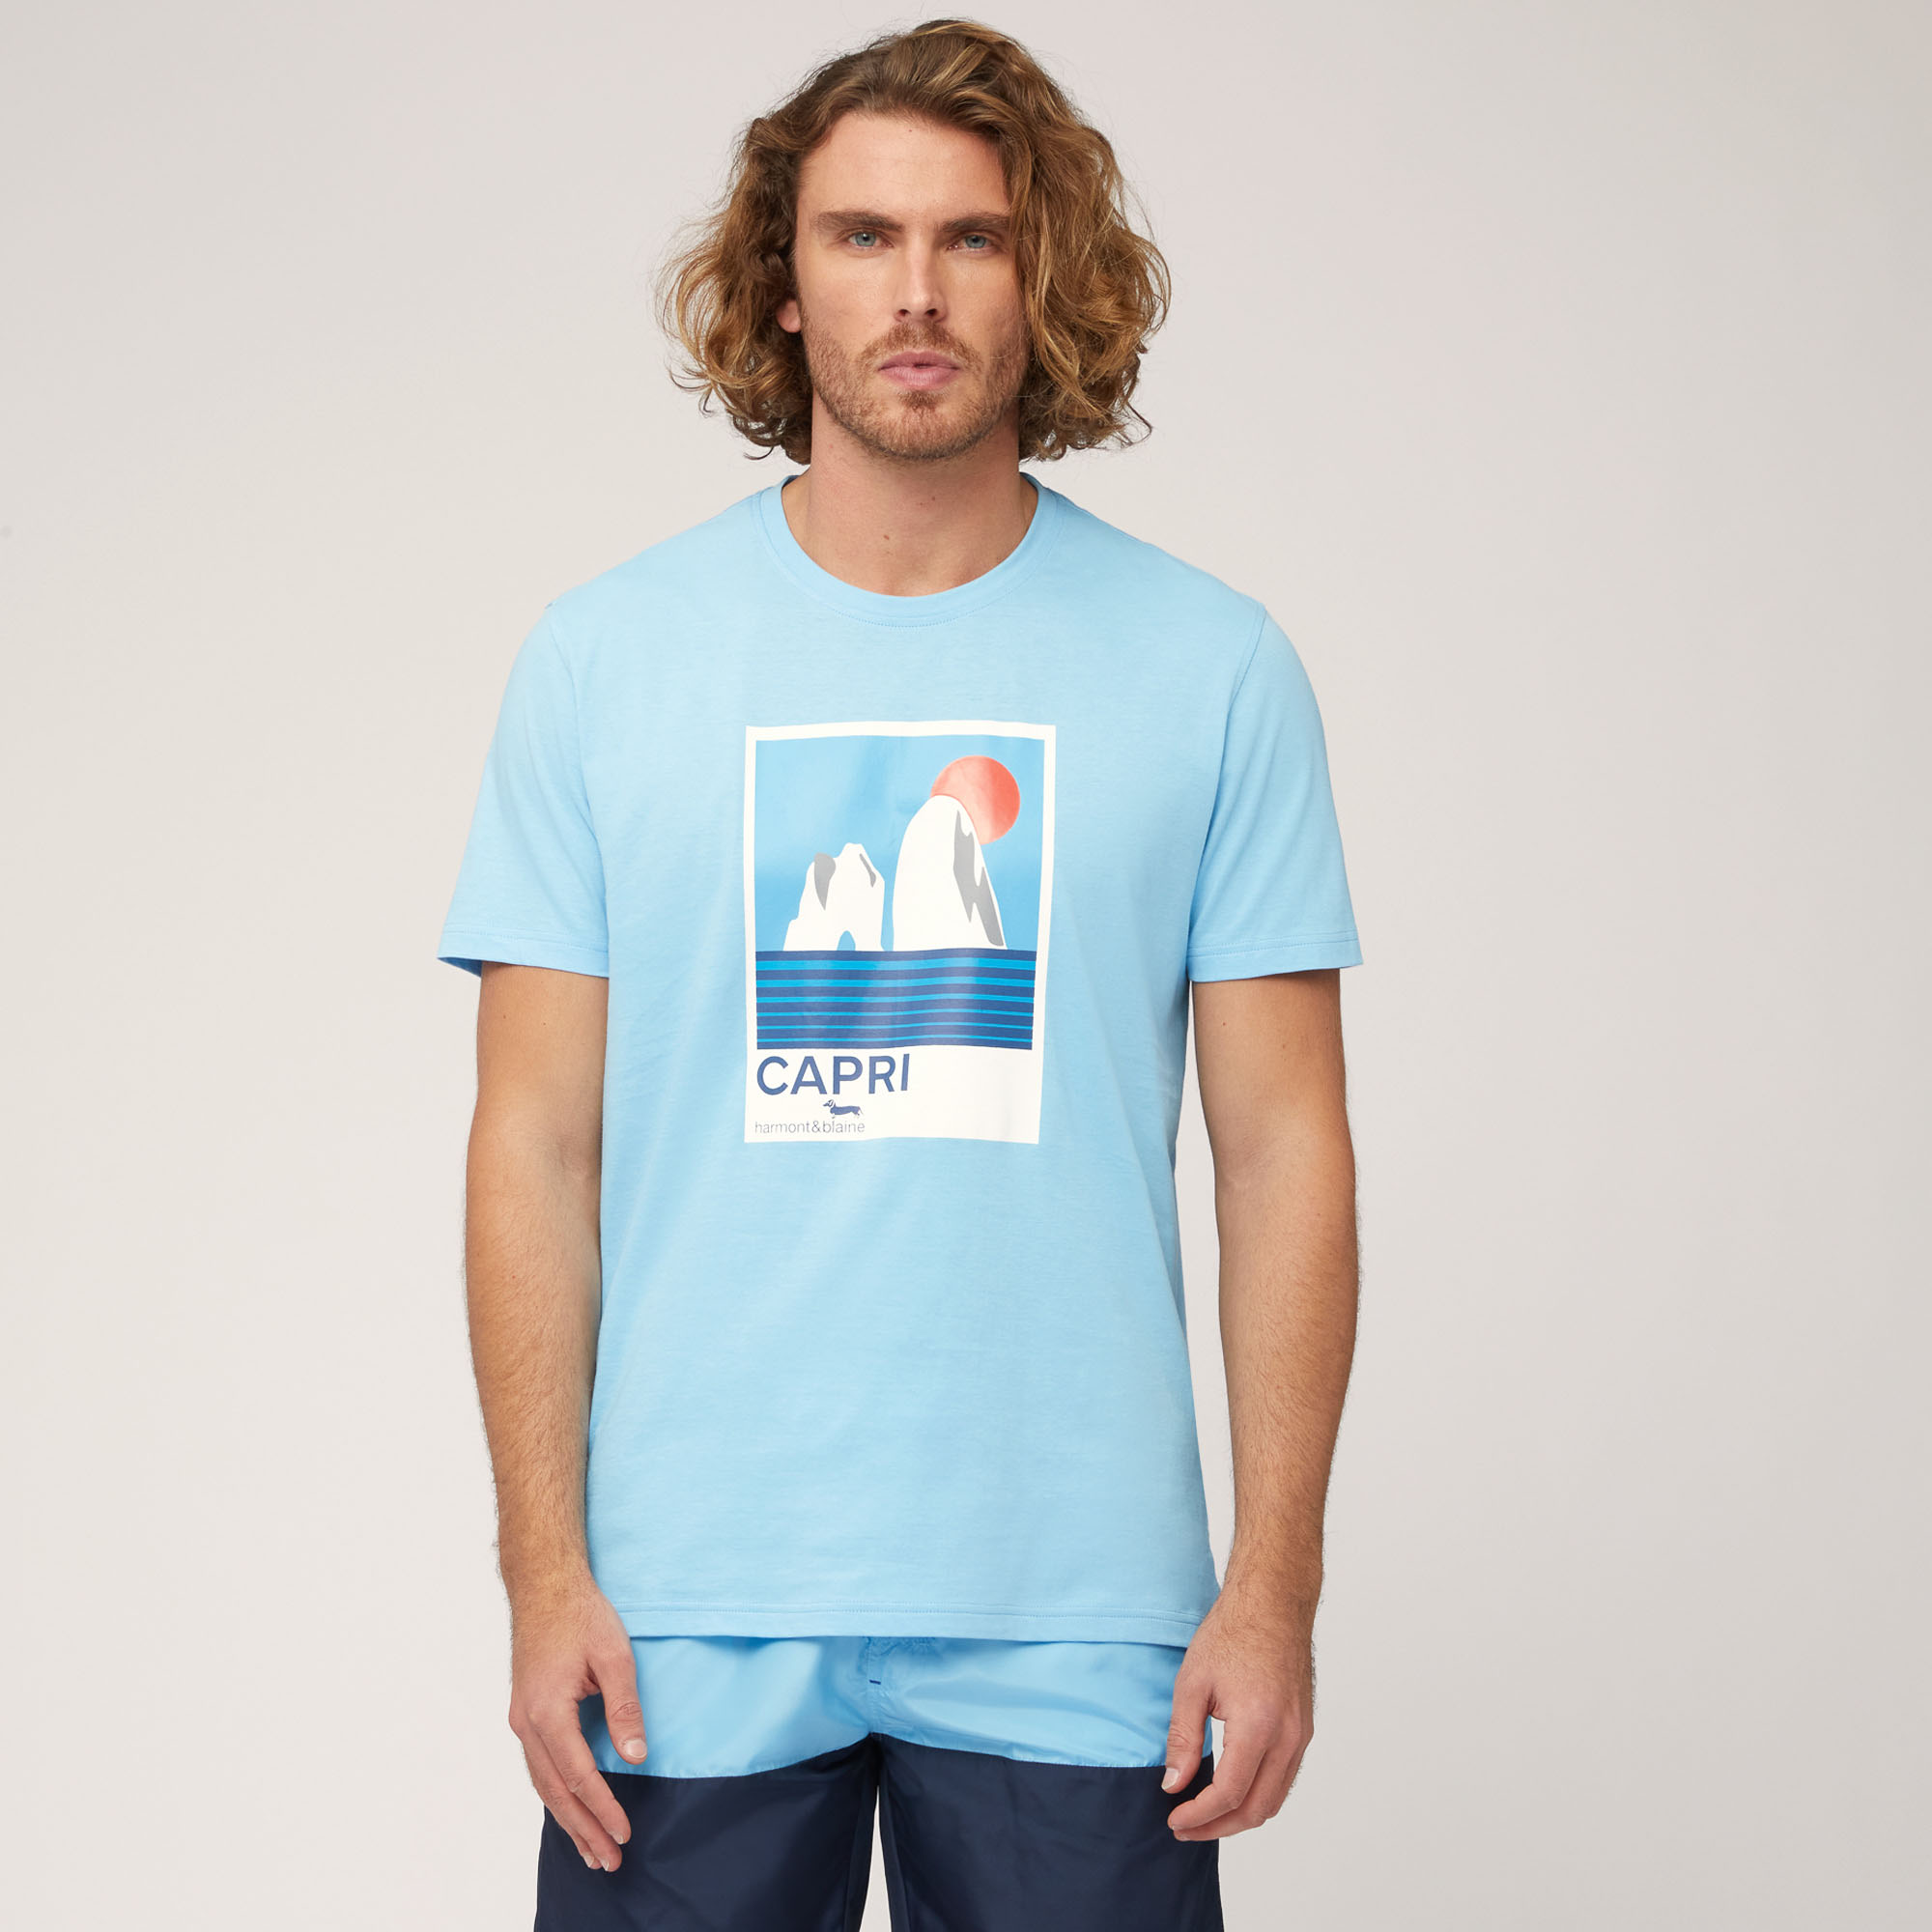 T-shirt Côte Amalfitaine, Bleu, large